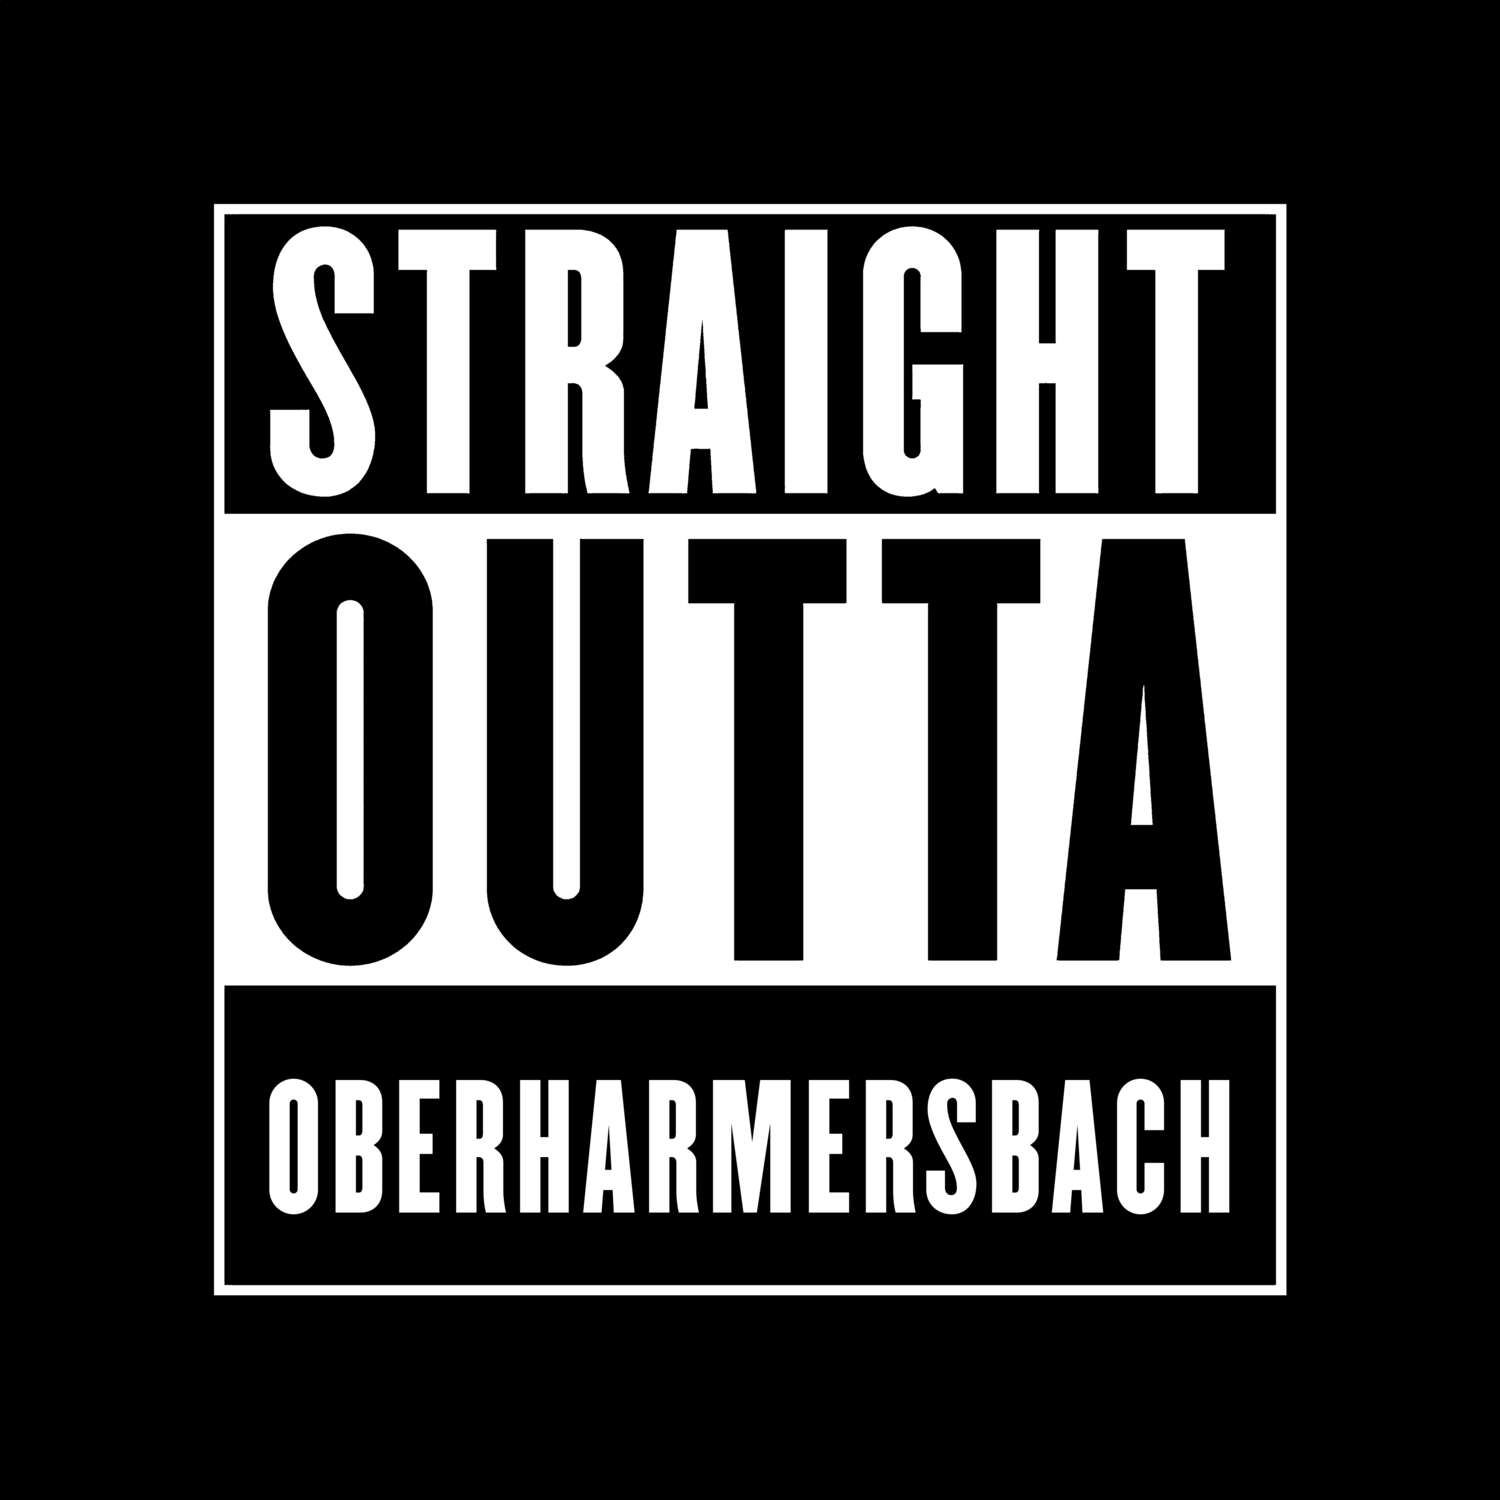 Oberharmersbach T-Shirt »Straight Outta«